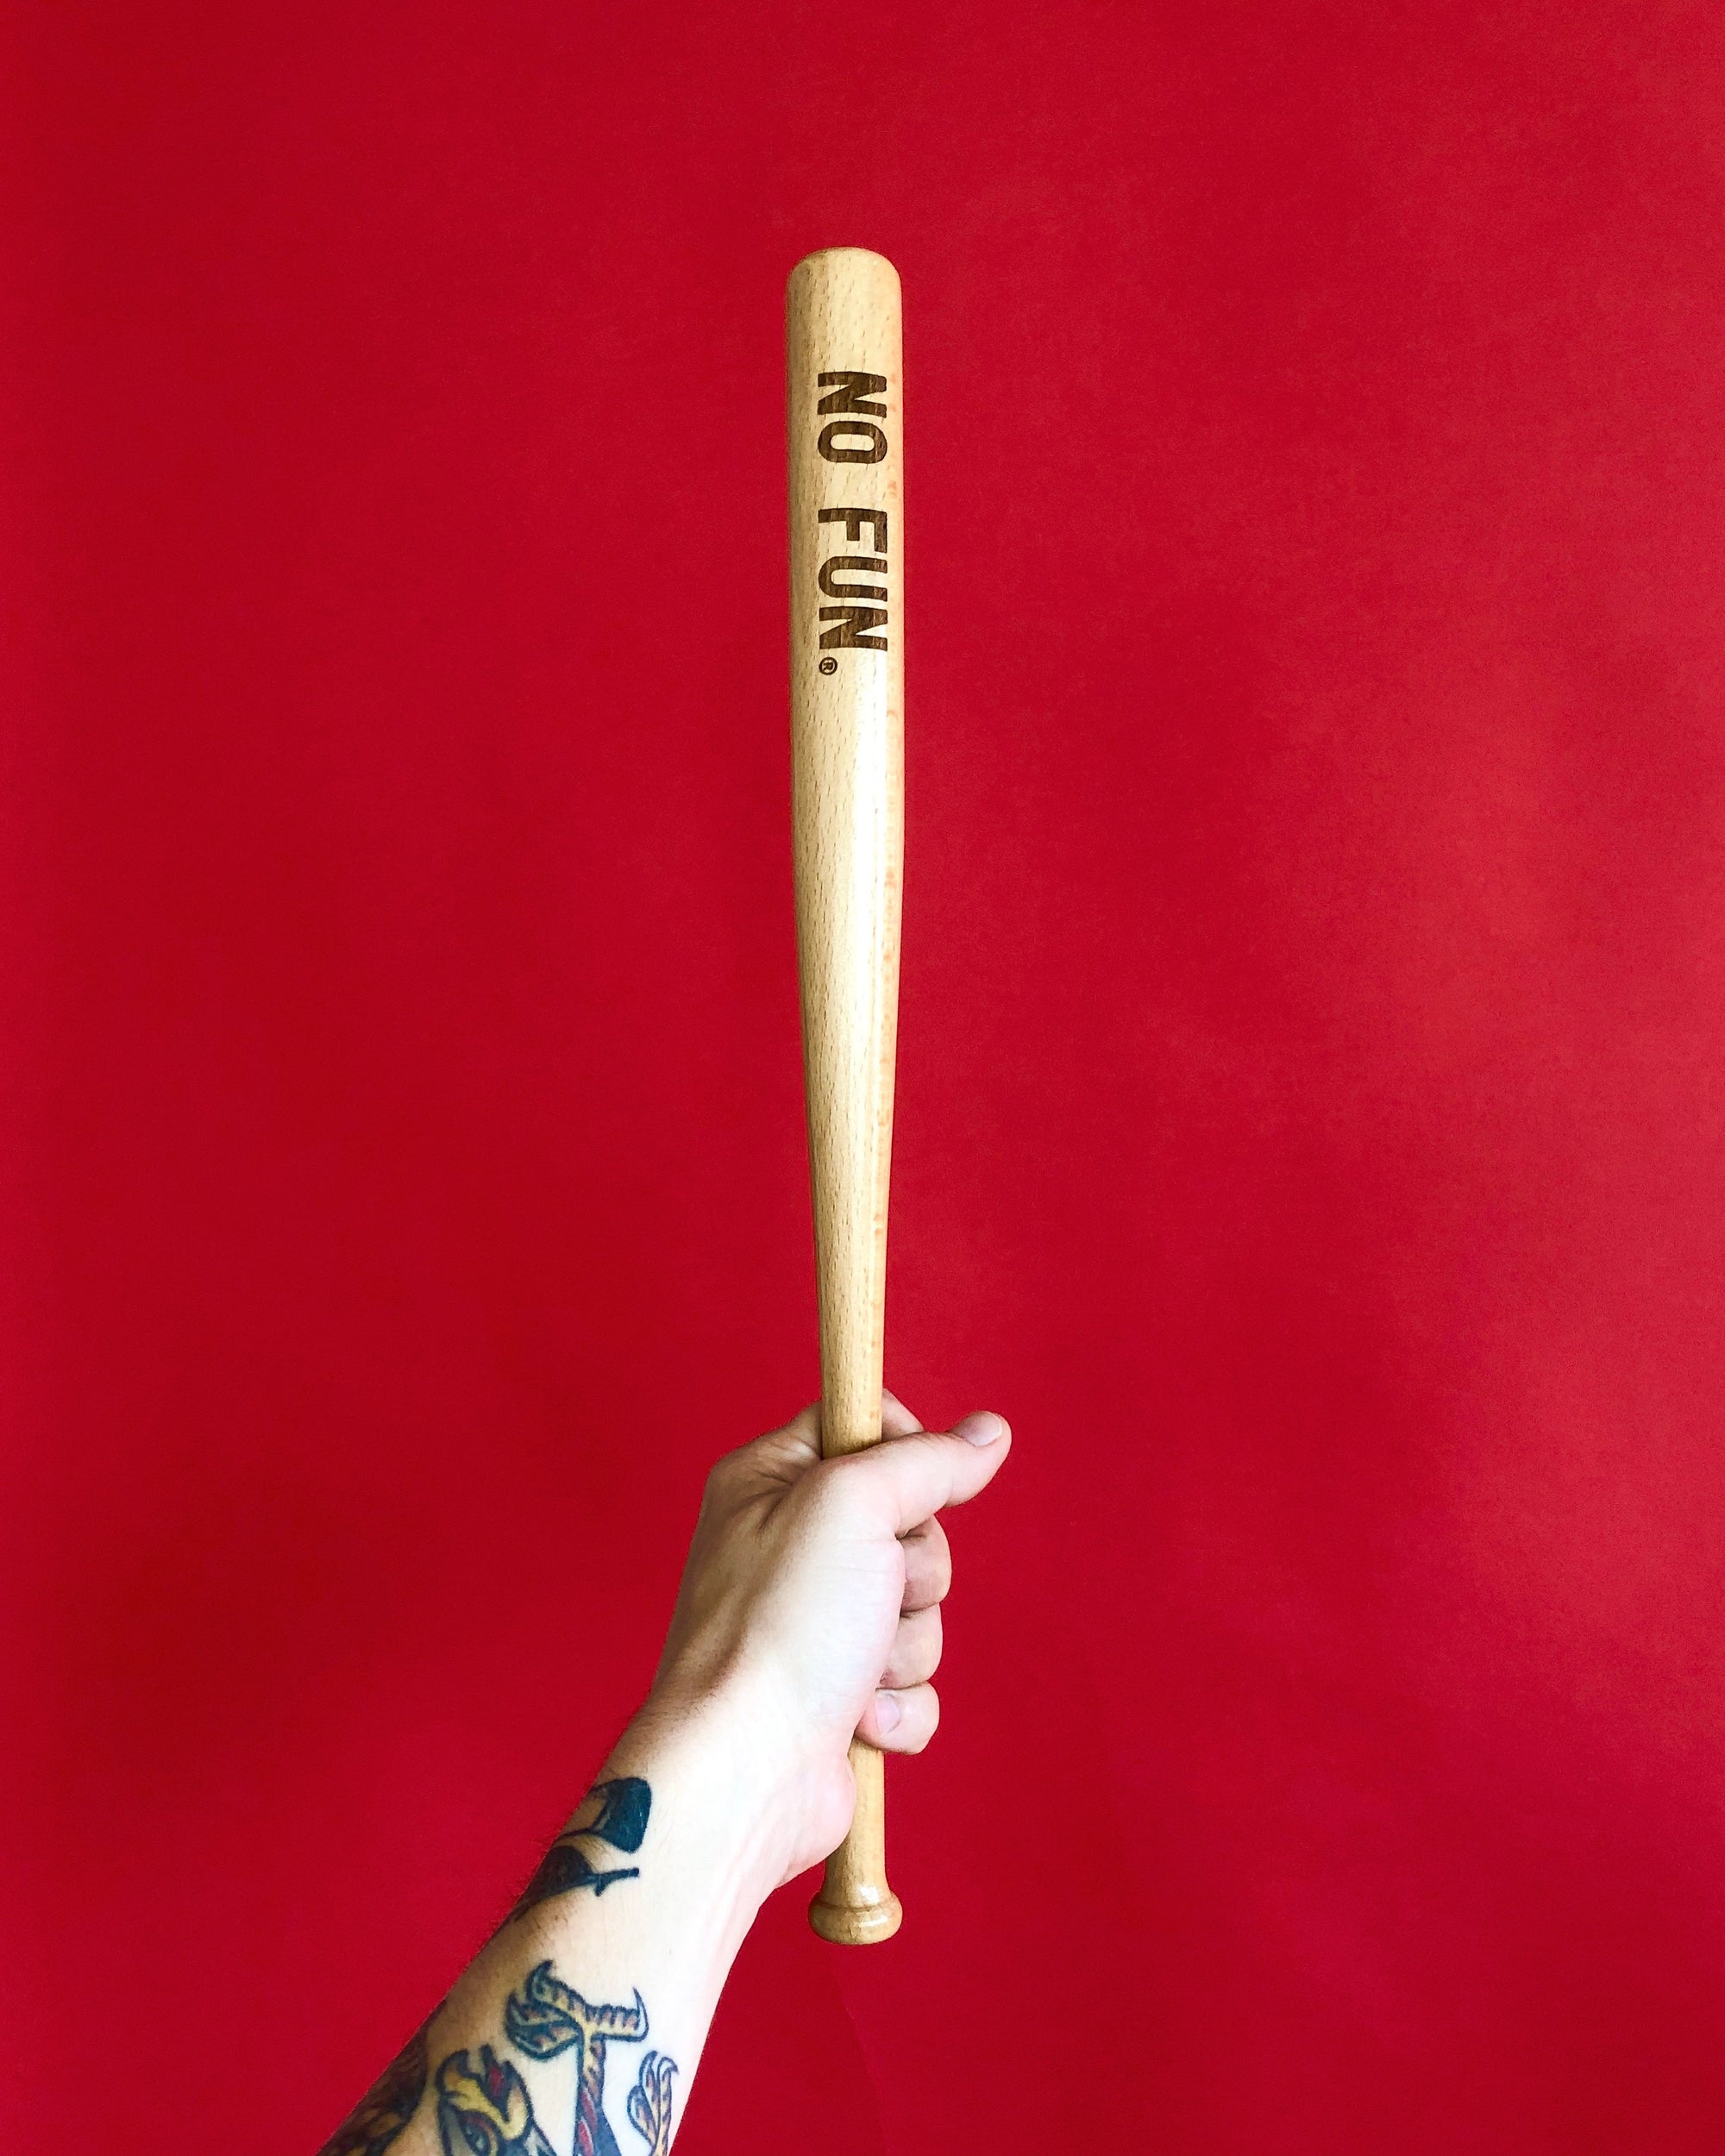 The original "NO FUN®" mini bat.  The bat measures 18" long and features a laser engraved "NO FUN®" logo near the top of the barrel.   